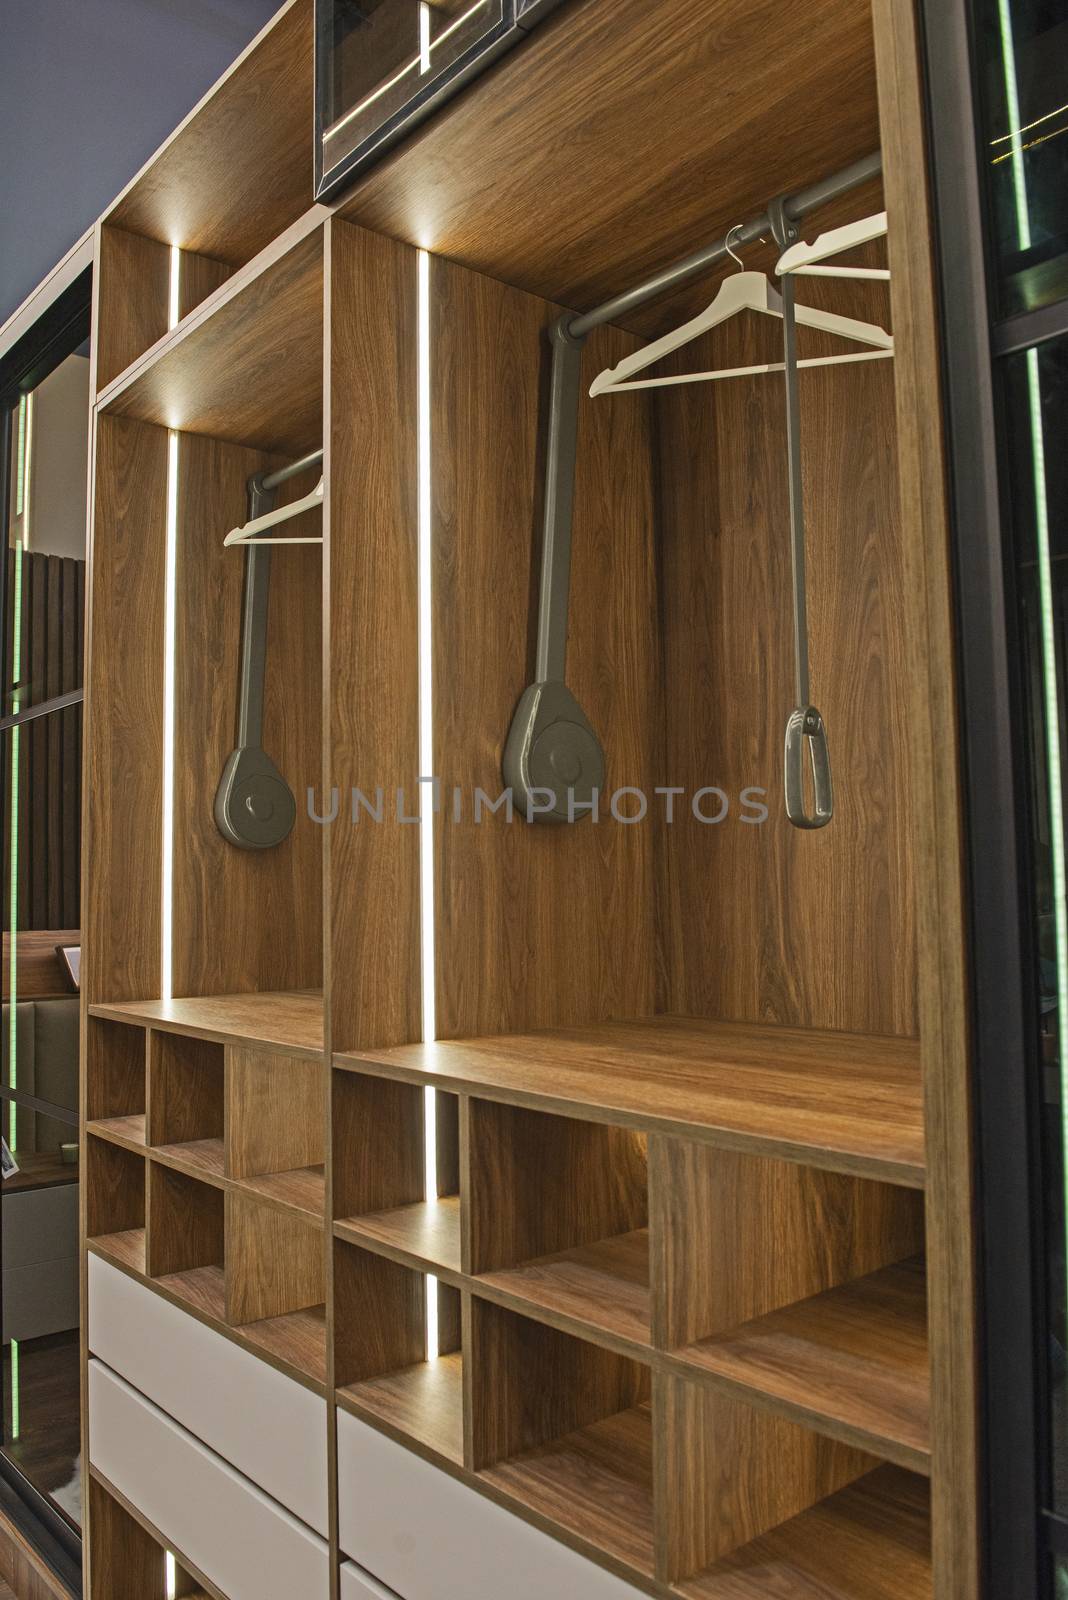 Interior design of bedroom closet wardrobe in house by paulvinten